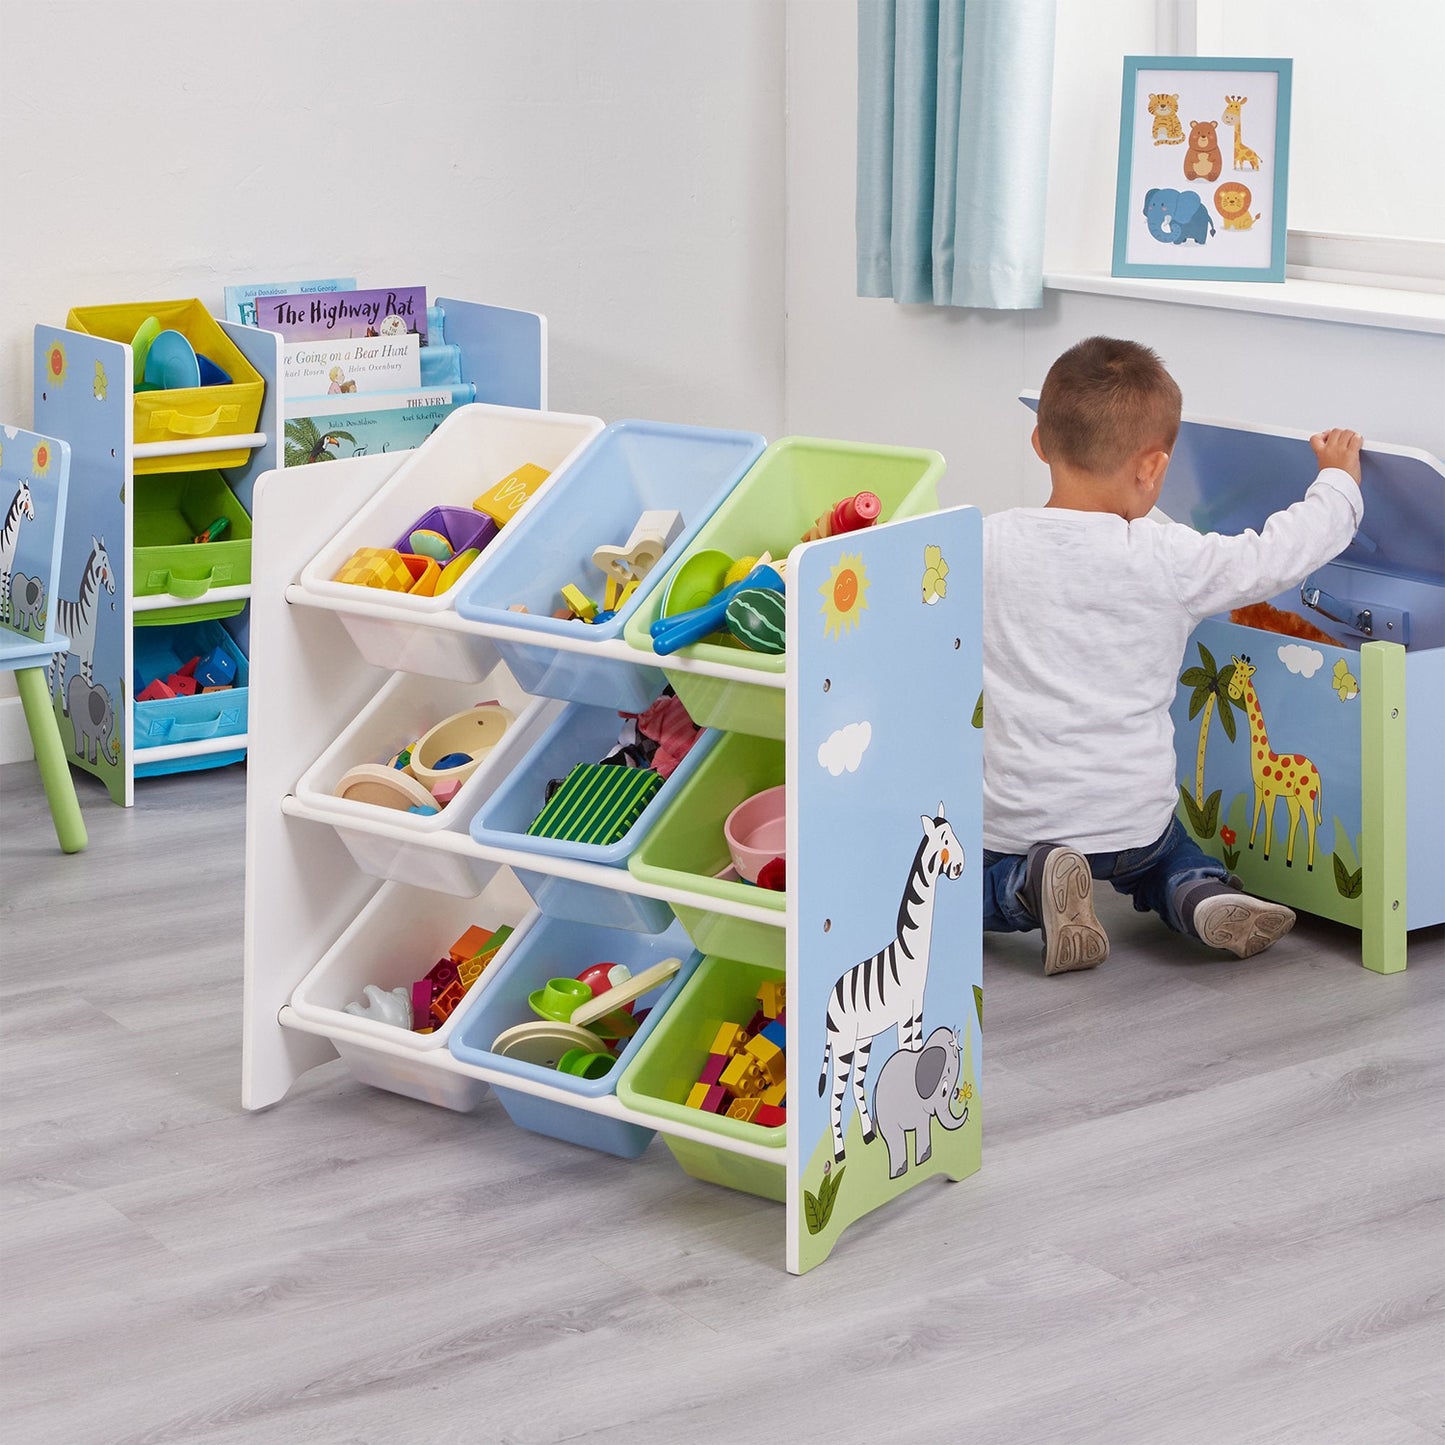 Safari Storage Shelf with Plastic Storage Boxes by Liberty House Toys